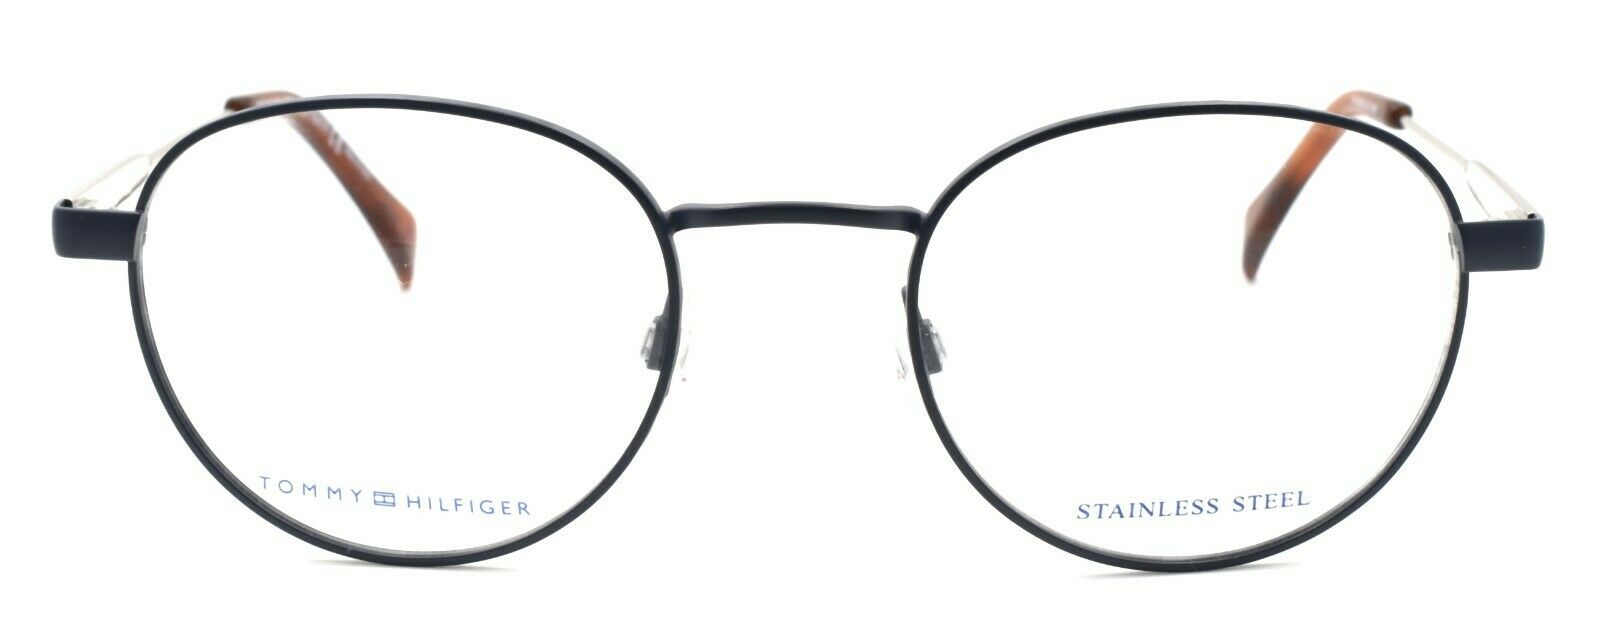 2-TOMMY HILFIGER TH 1309 0JI Unisex Eyeglasses Frames 49-21-145 Blue + CASE-762753061256-IKSpecs